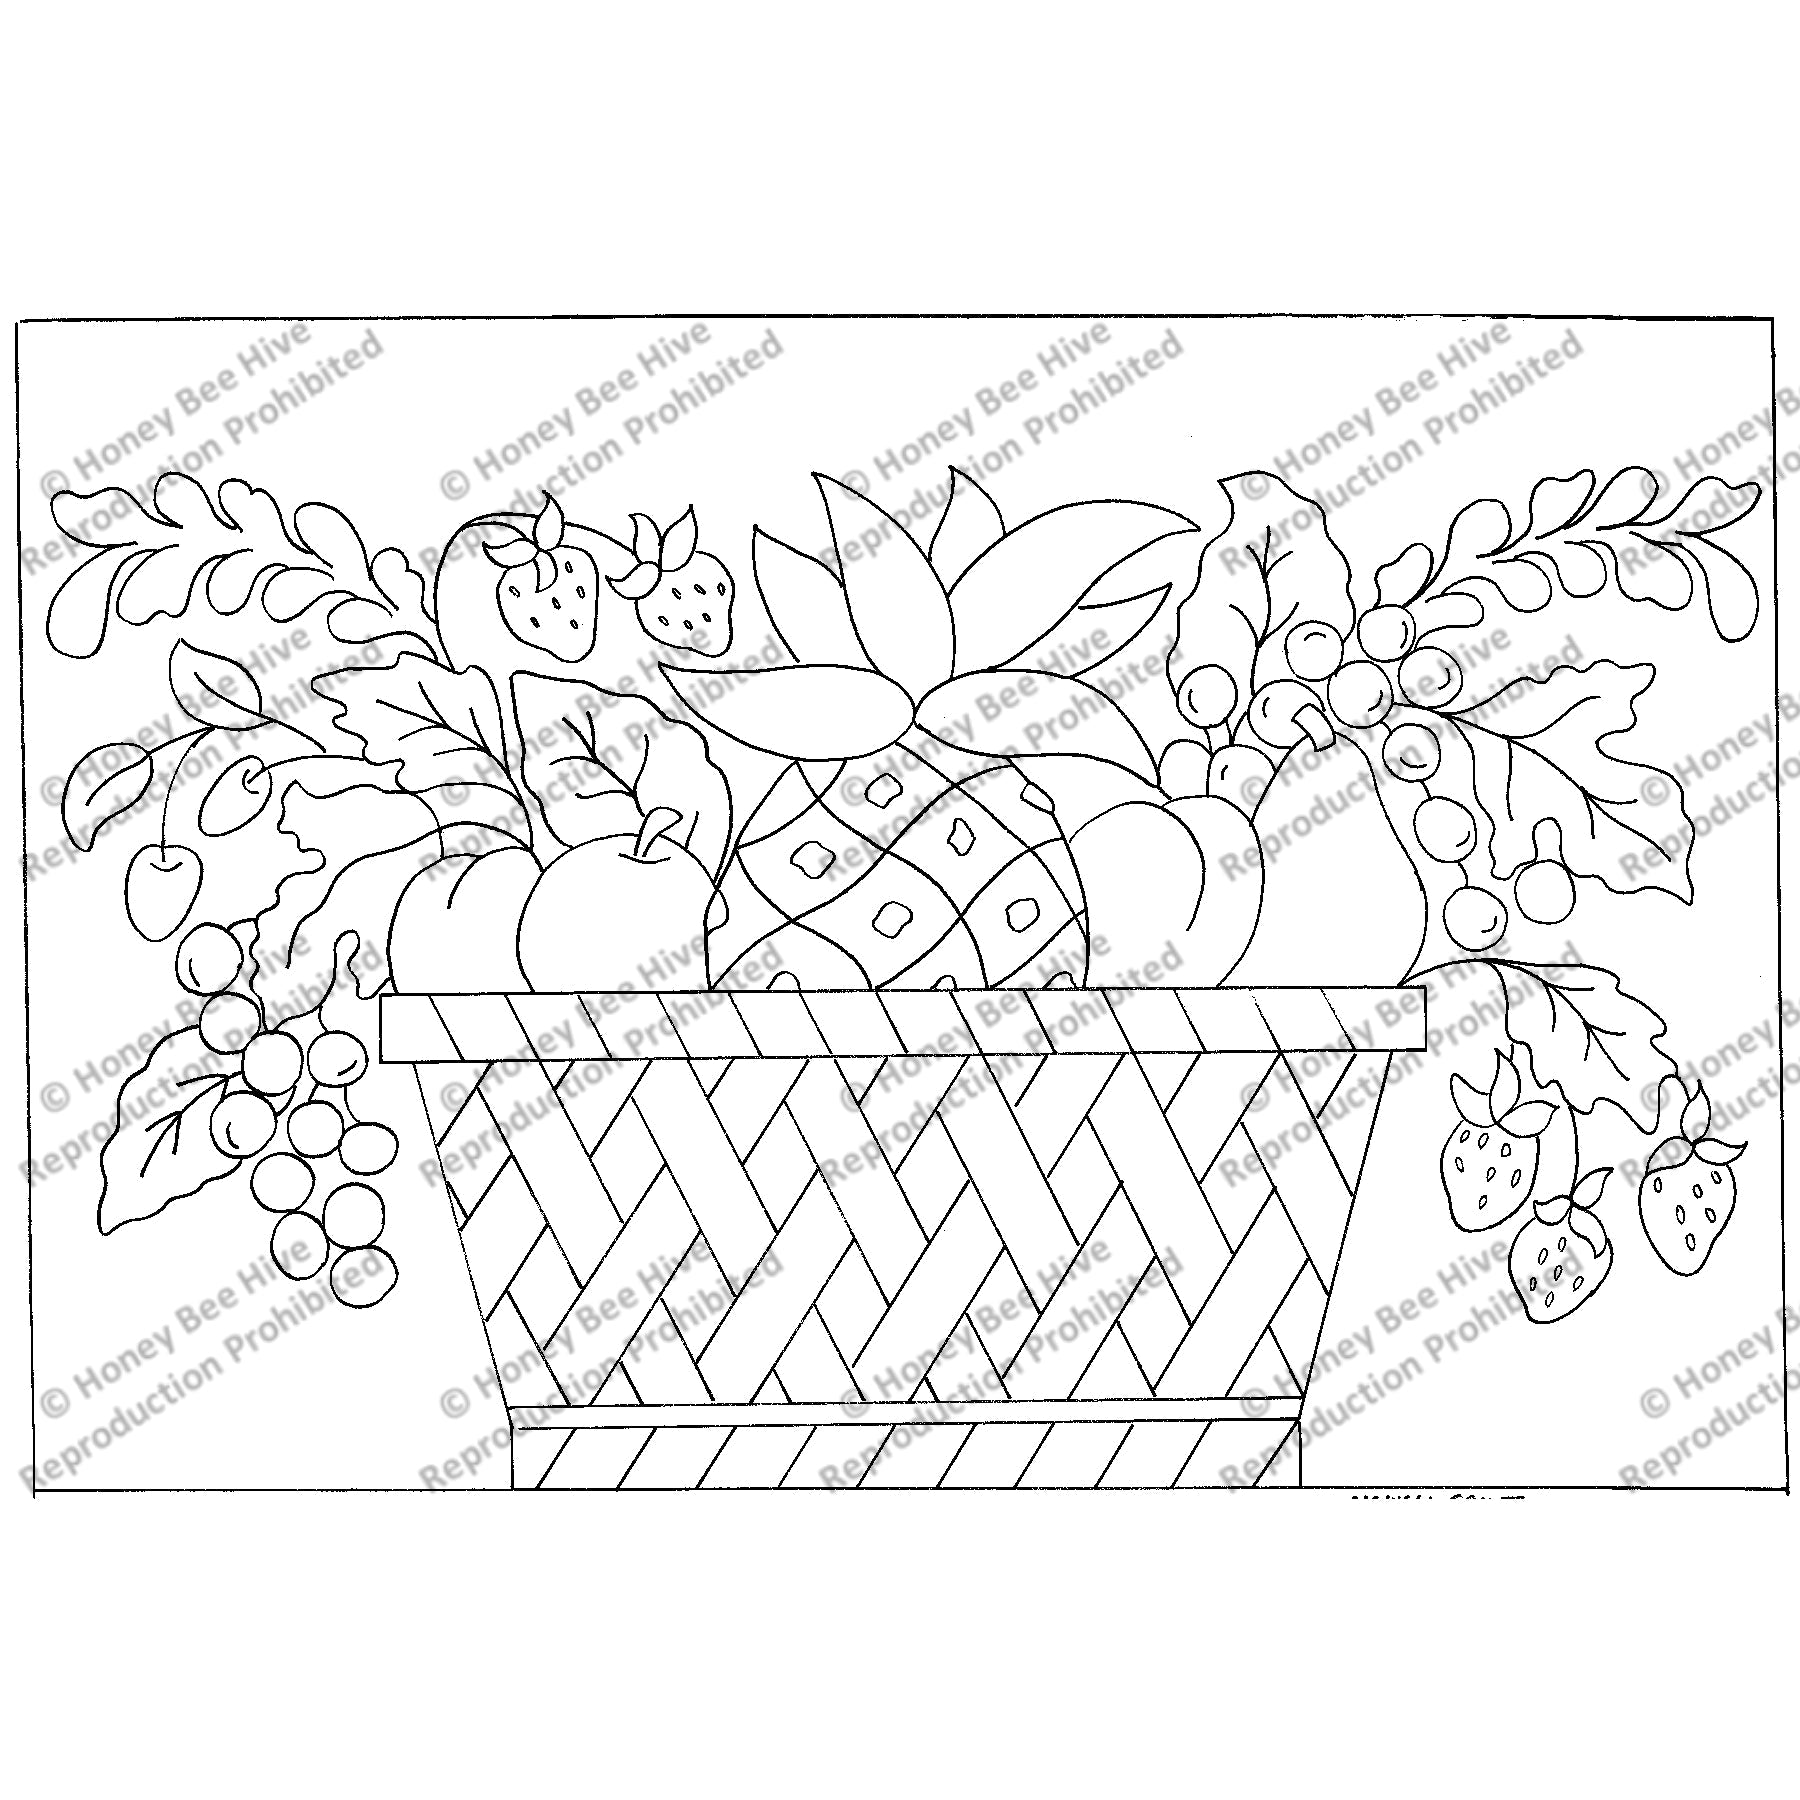 Caswell Fruit Basket, rug hooking pattern